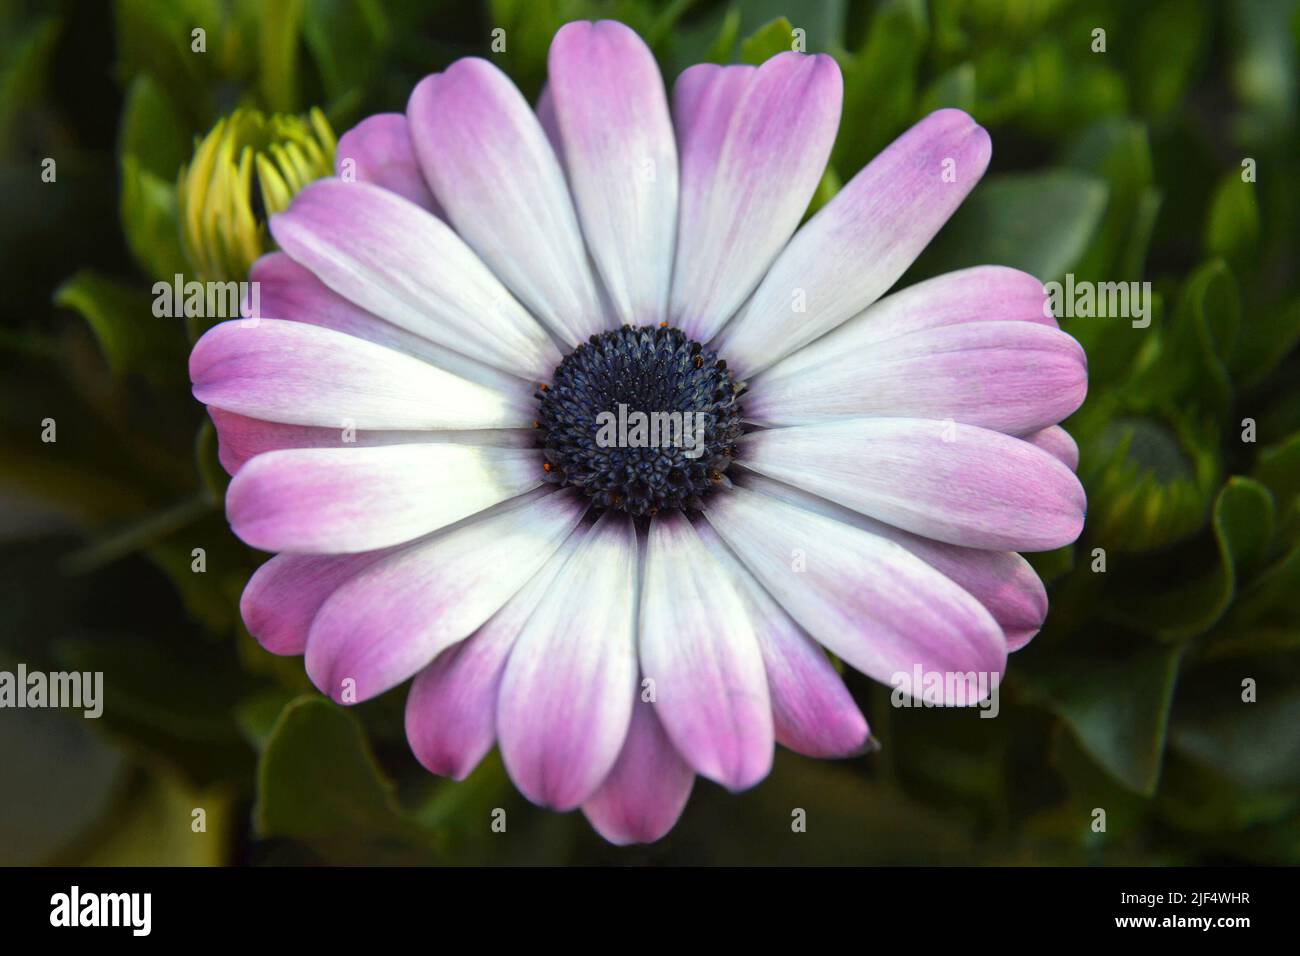 African daisy or Osteospermum flower in the garden Stock Photo